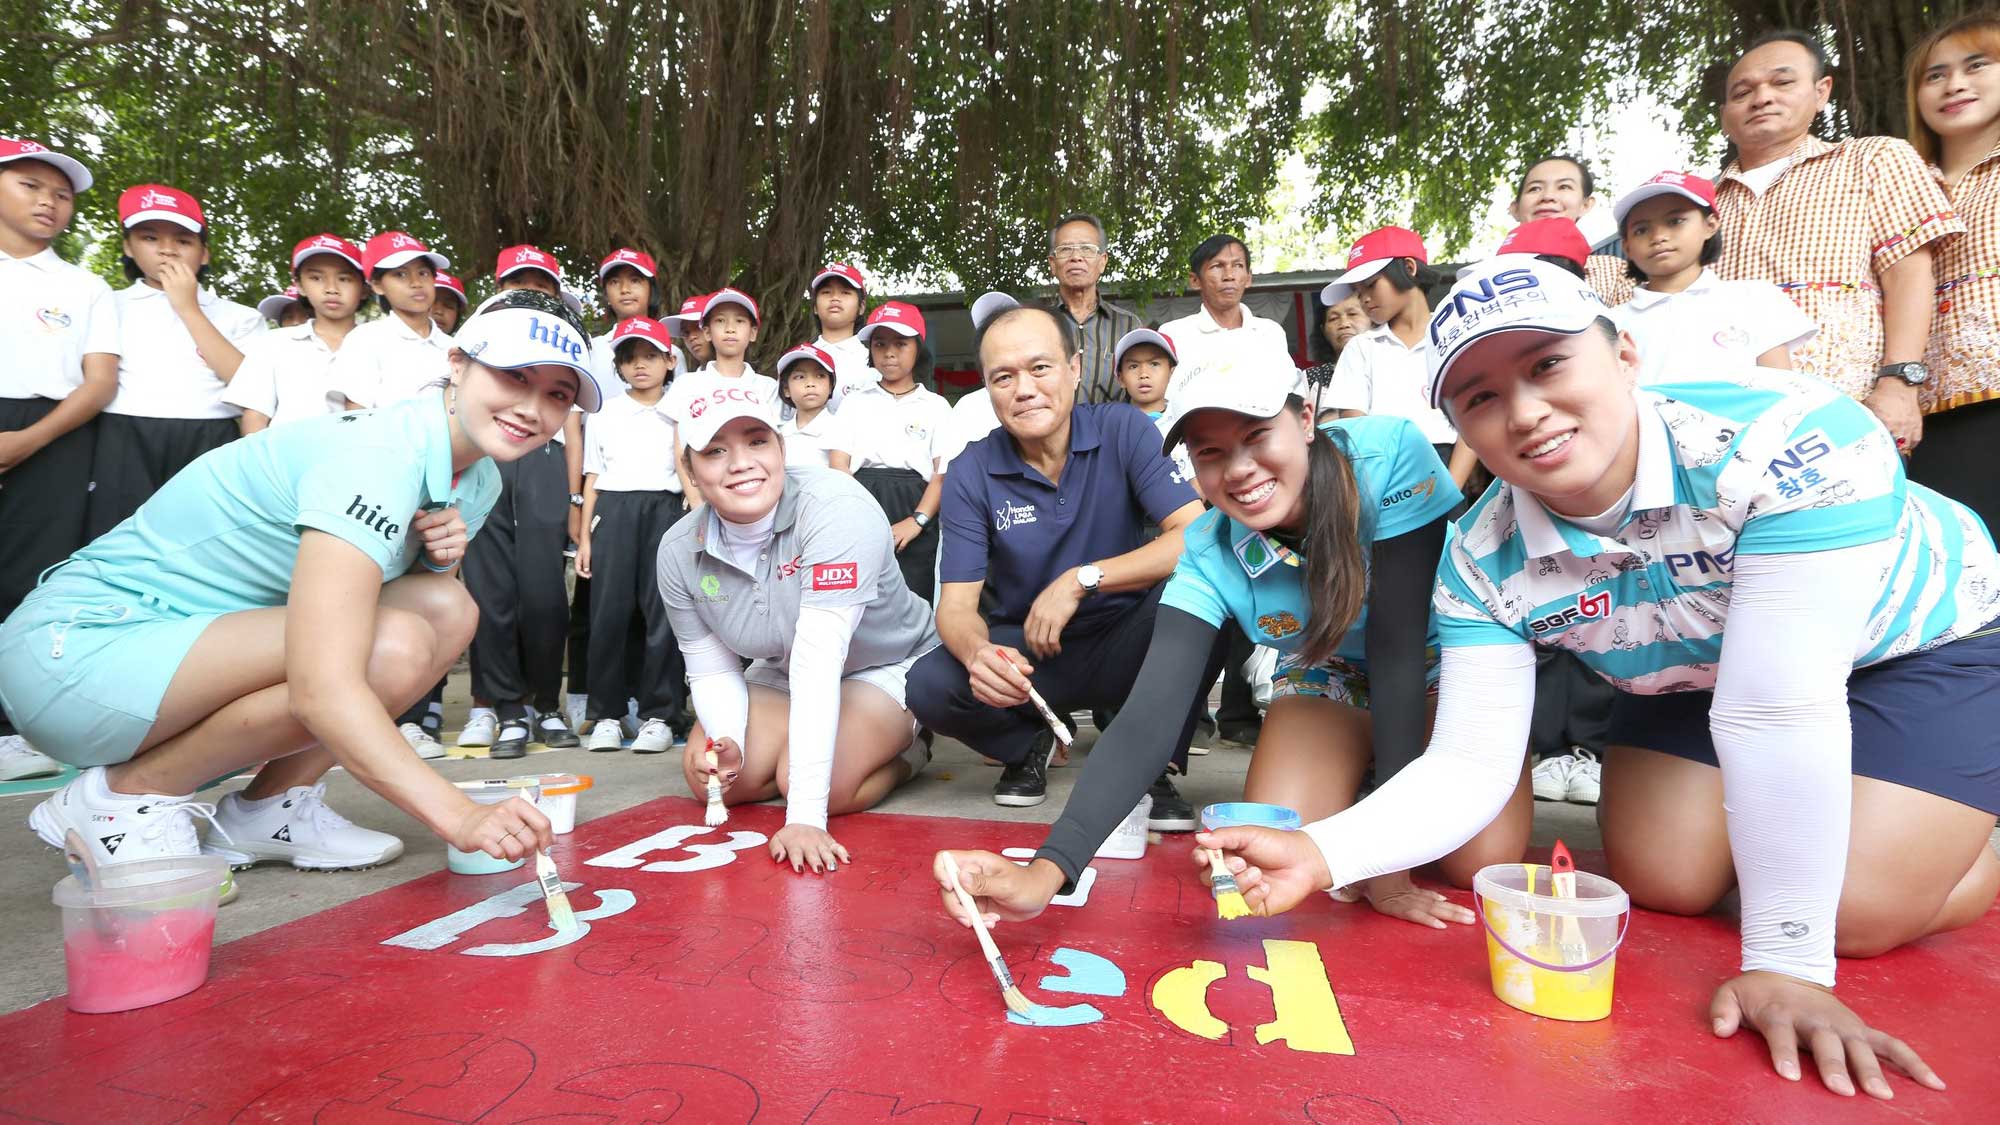 Ariya Jutanugarn Spends Time with Kids in Thailand